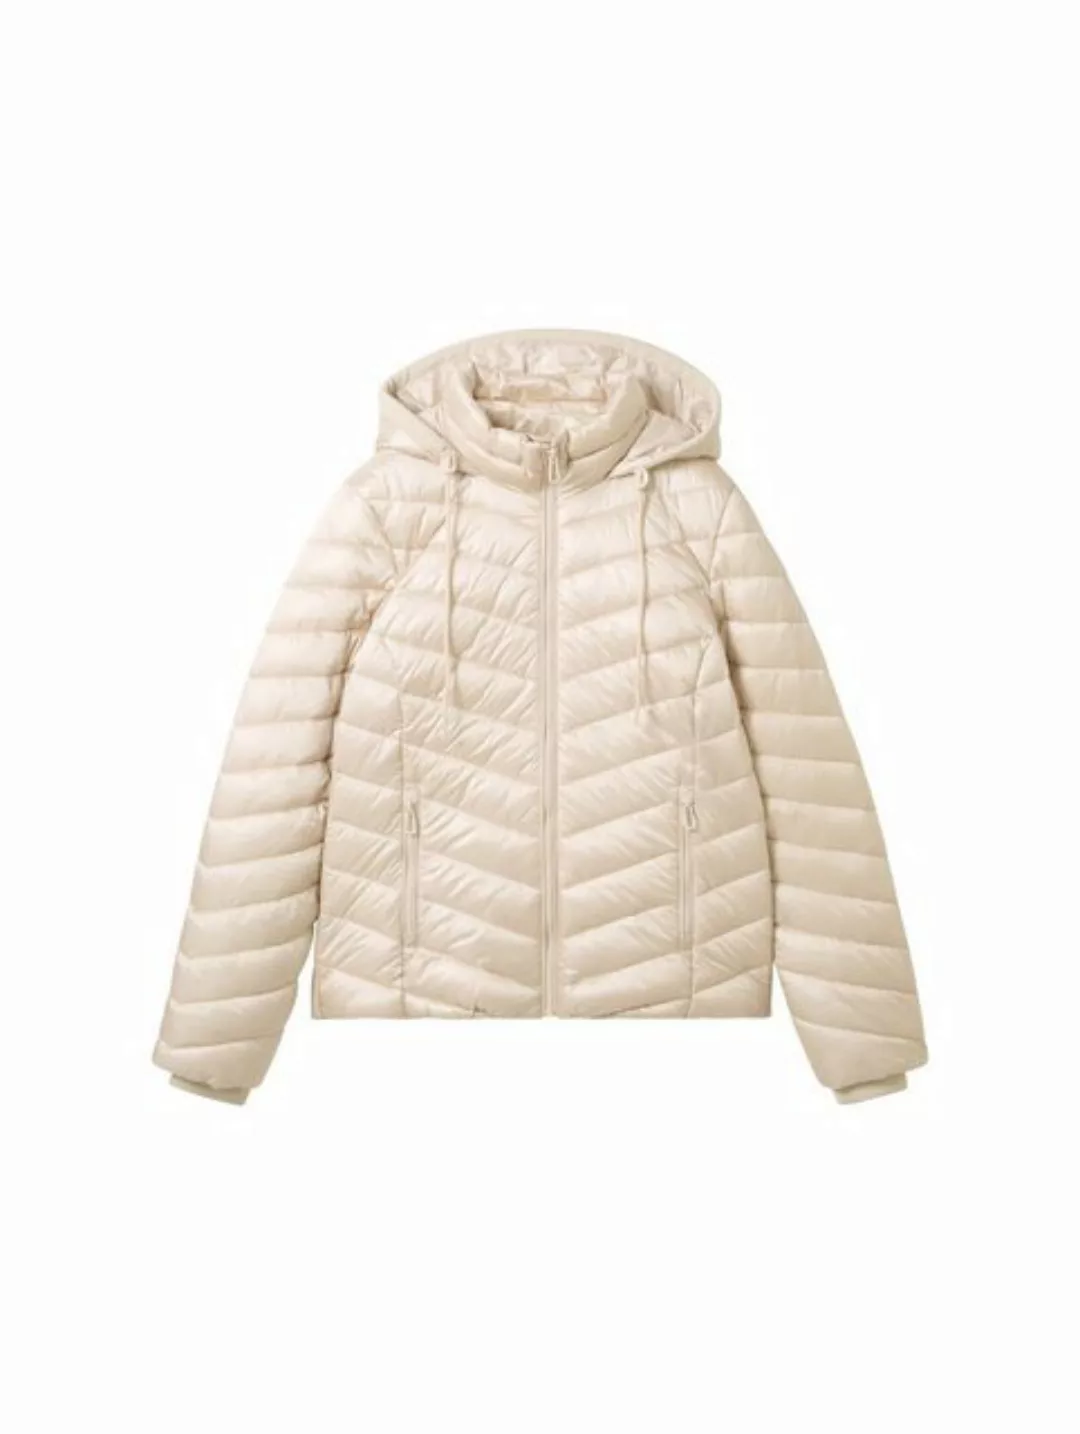 TOM TAILOR Outdoorjacke hooded lightweight jacket günstig online kaufen